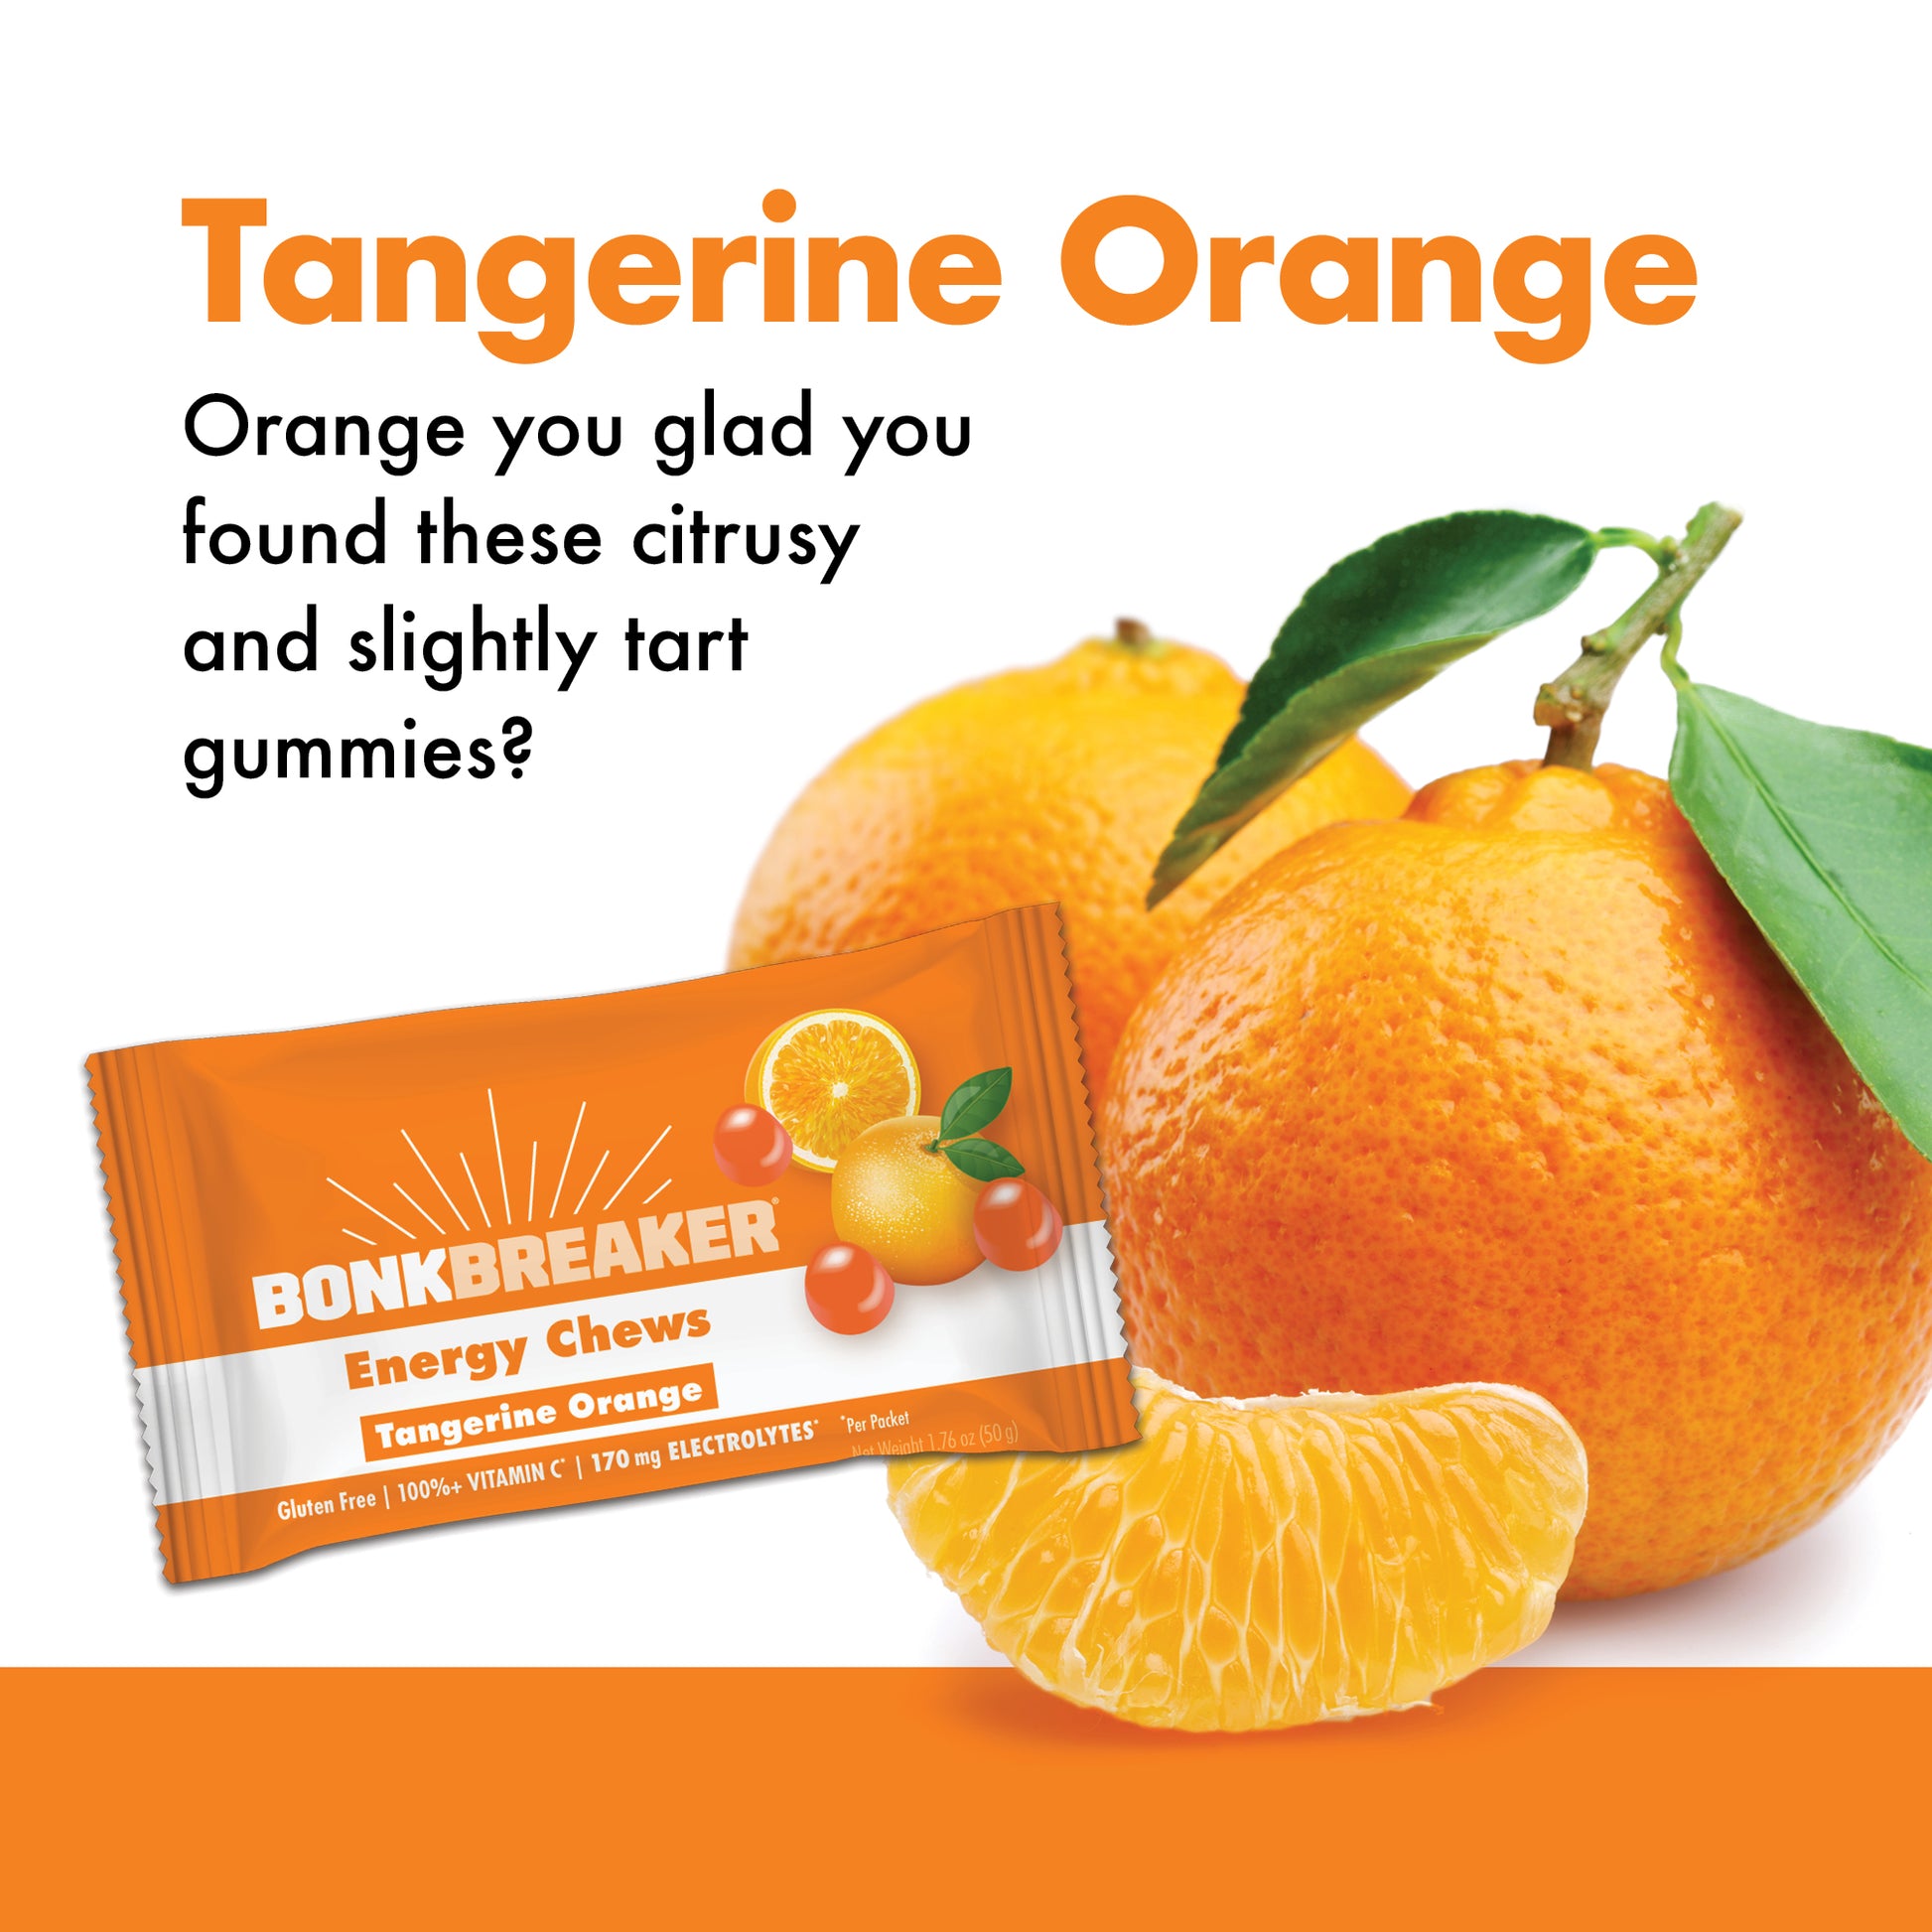 Tangerine Orange - Orange you glad you found these citrusy and slightly tart gummies?